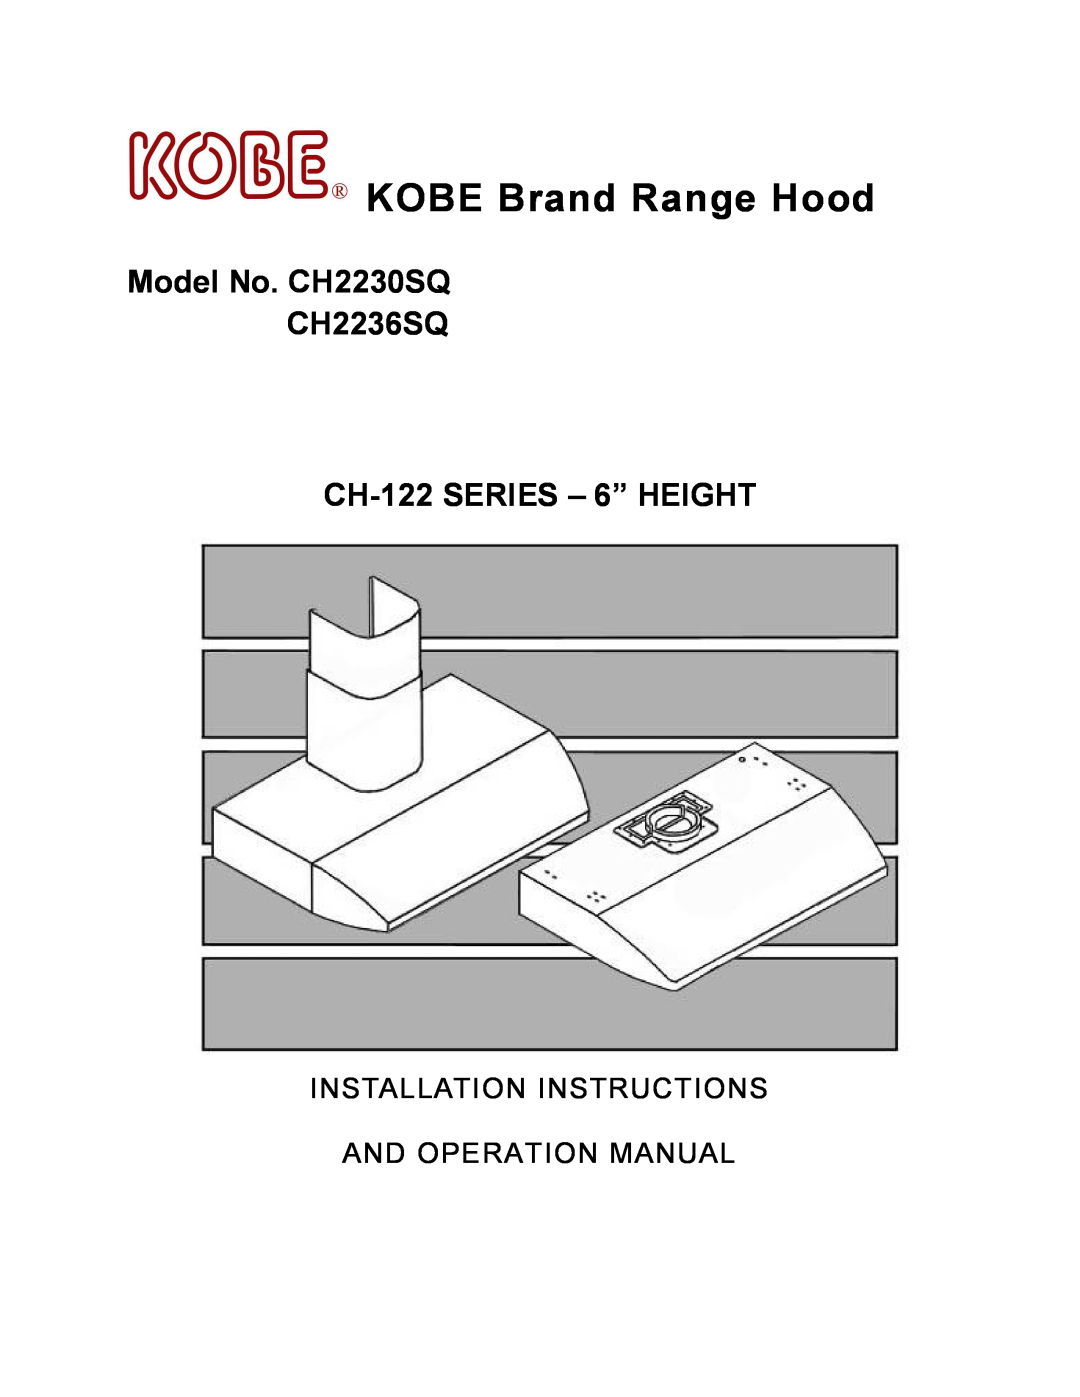 Kobe Range Hoods manual KOBE Brand Range Hood, Model No. CH2230SQ CH2236SQ CH-122 SERIES 6 HEIGHT 